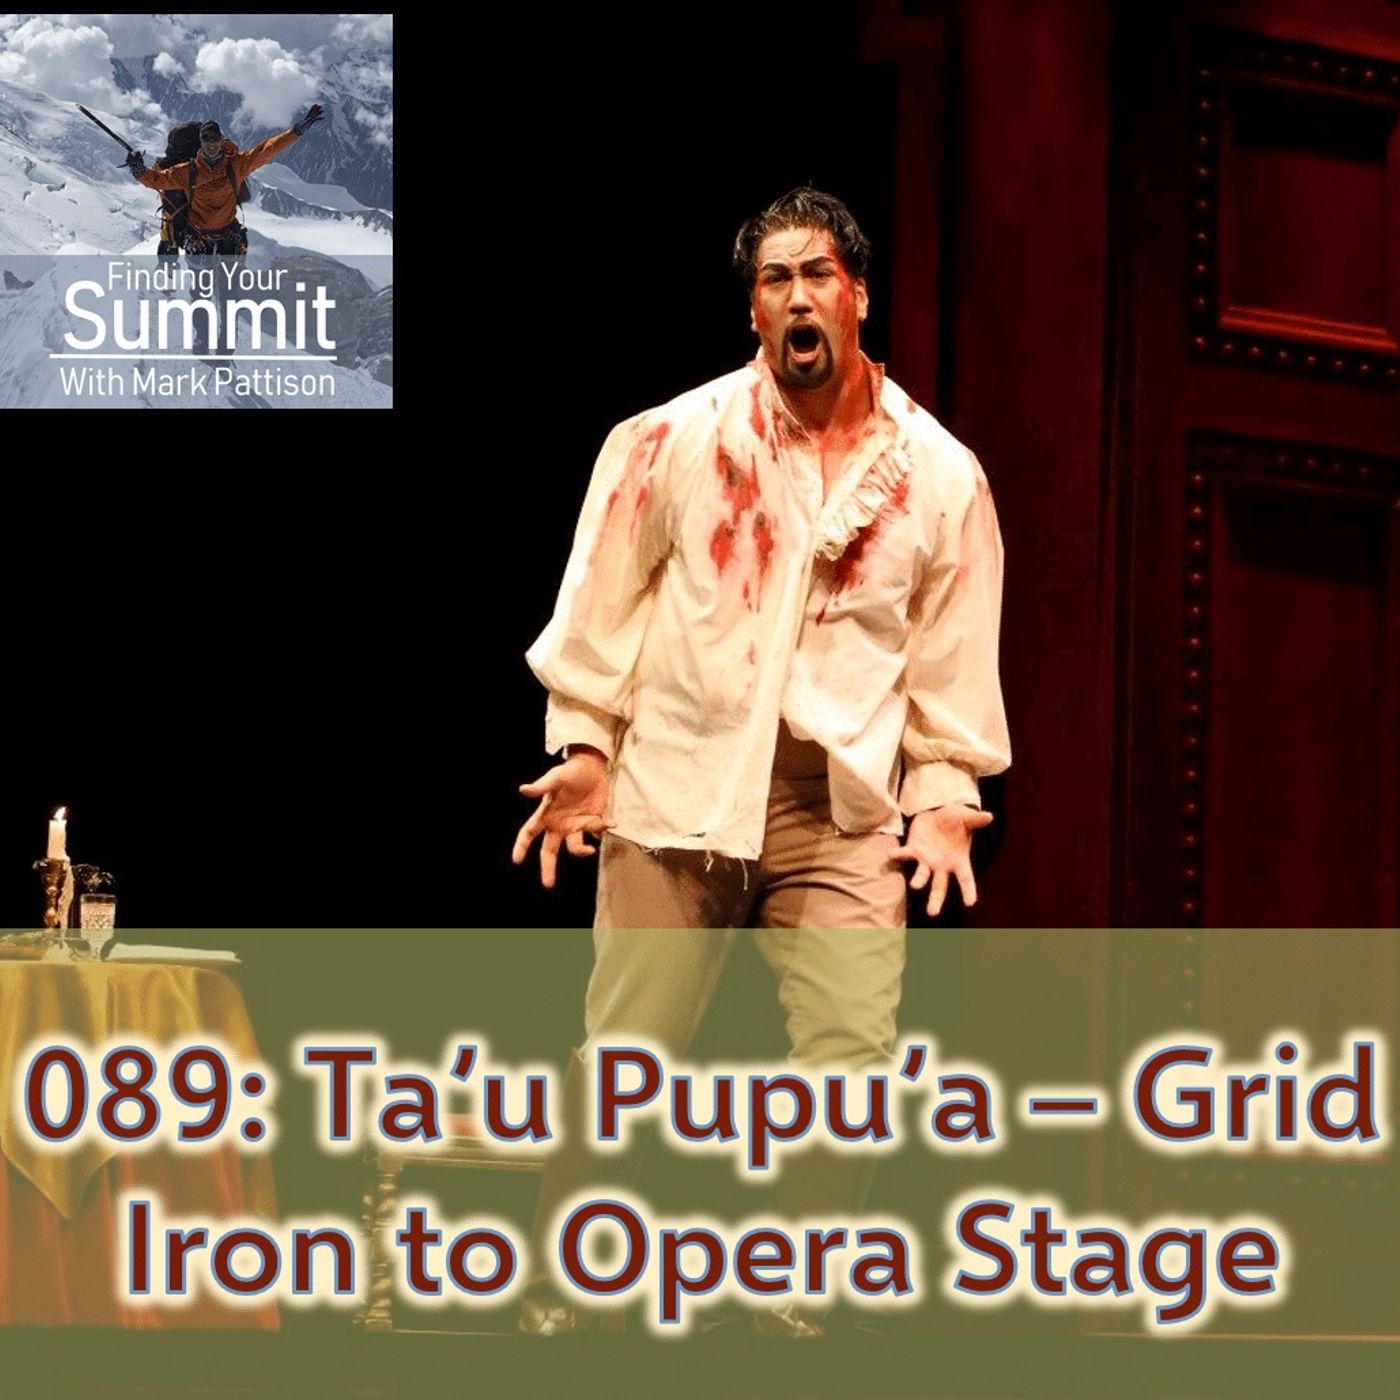 Ta’u Pupu’a - Grid Iron to Opera Stage